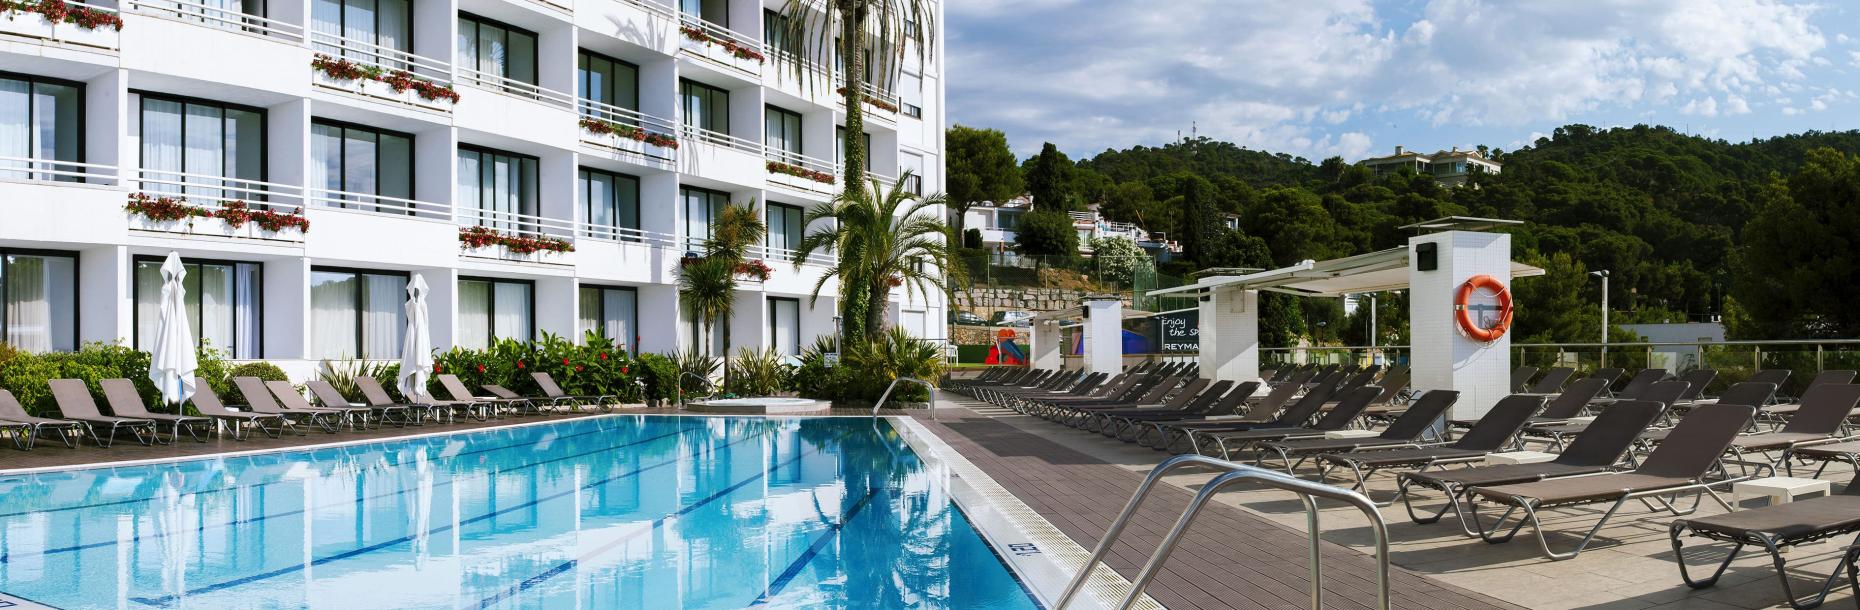 GRAN HOTEL REYMAR****s: votre hôtel de charme à Tossa de Mar, Costa Brava